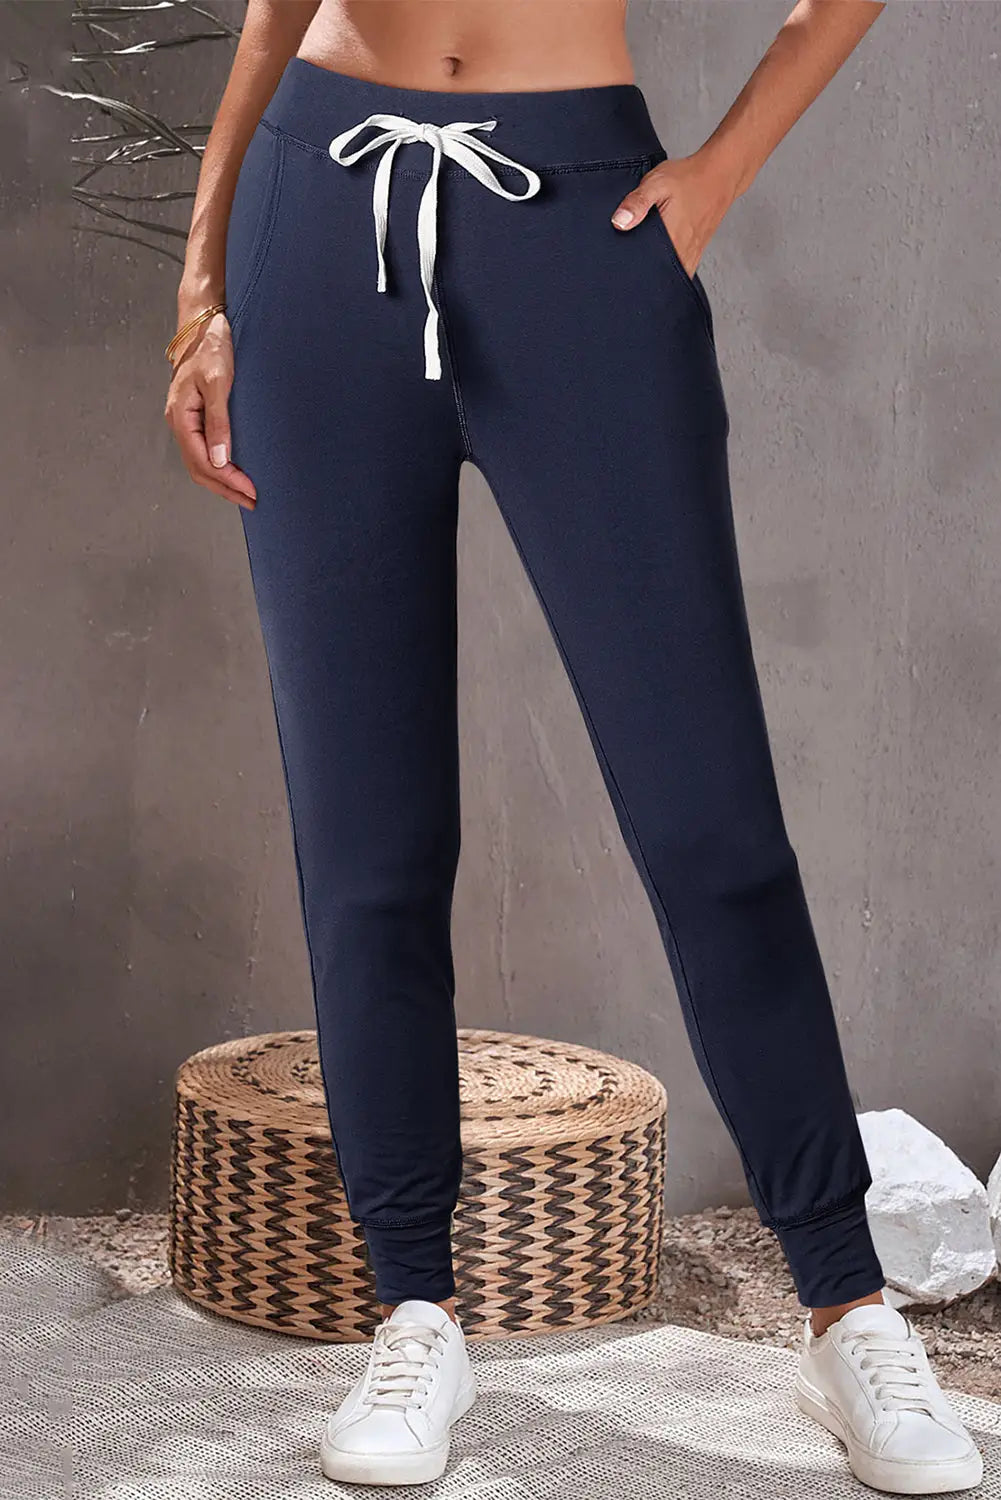 Aisha drawstring waist joggers - navy blue / s / 90% polyester + 10% elastane - bottoms/pants & culotte